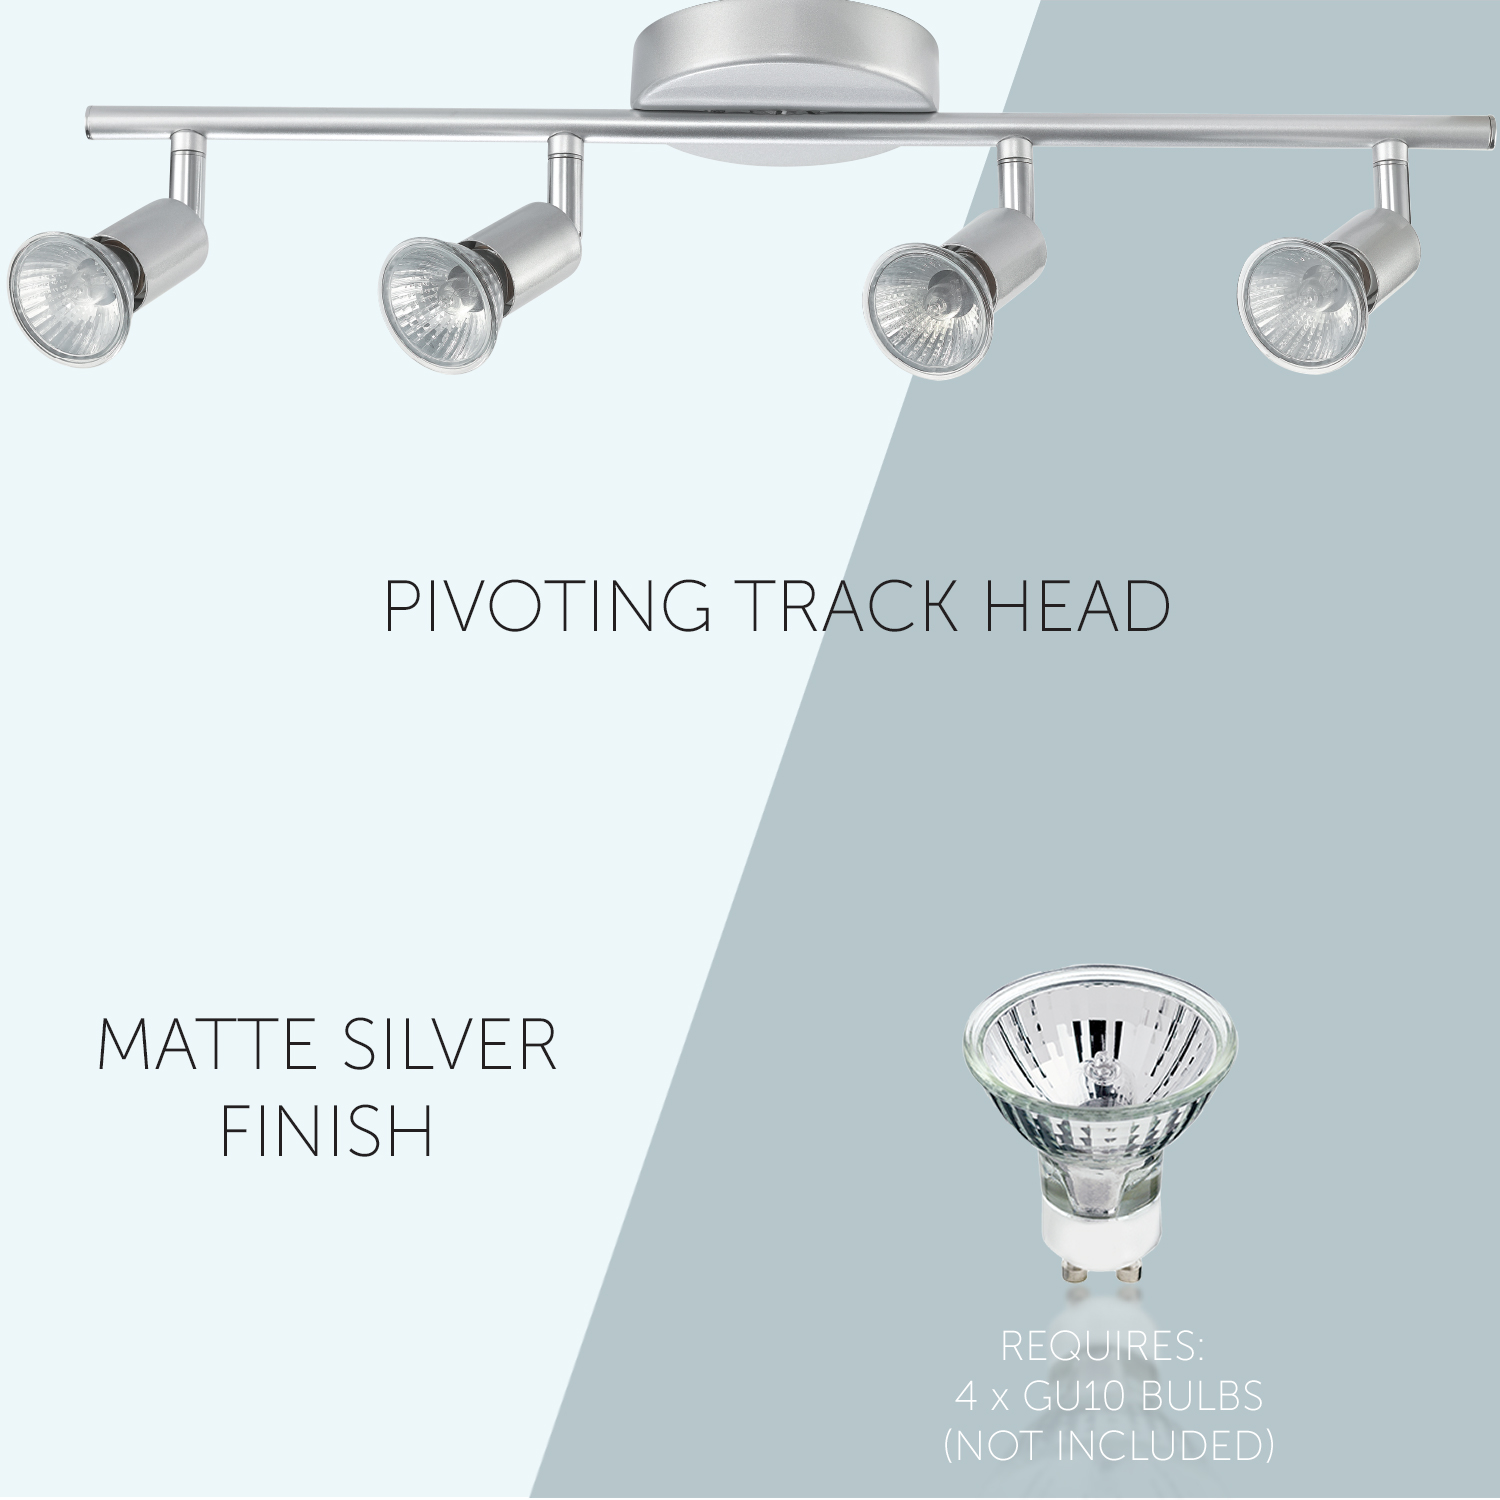 Globe Electric Payton 4-Light Matte Silver Track Lighting Kit, 58932 - image 2 of 3